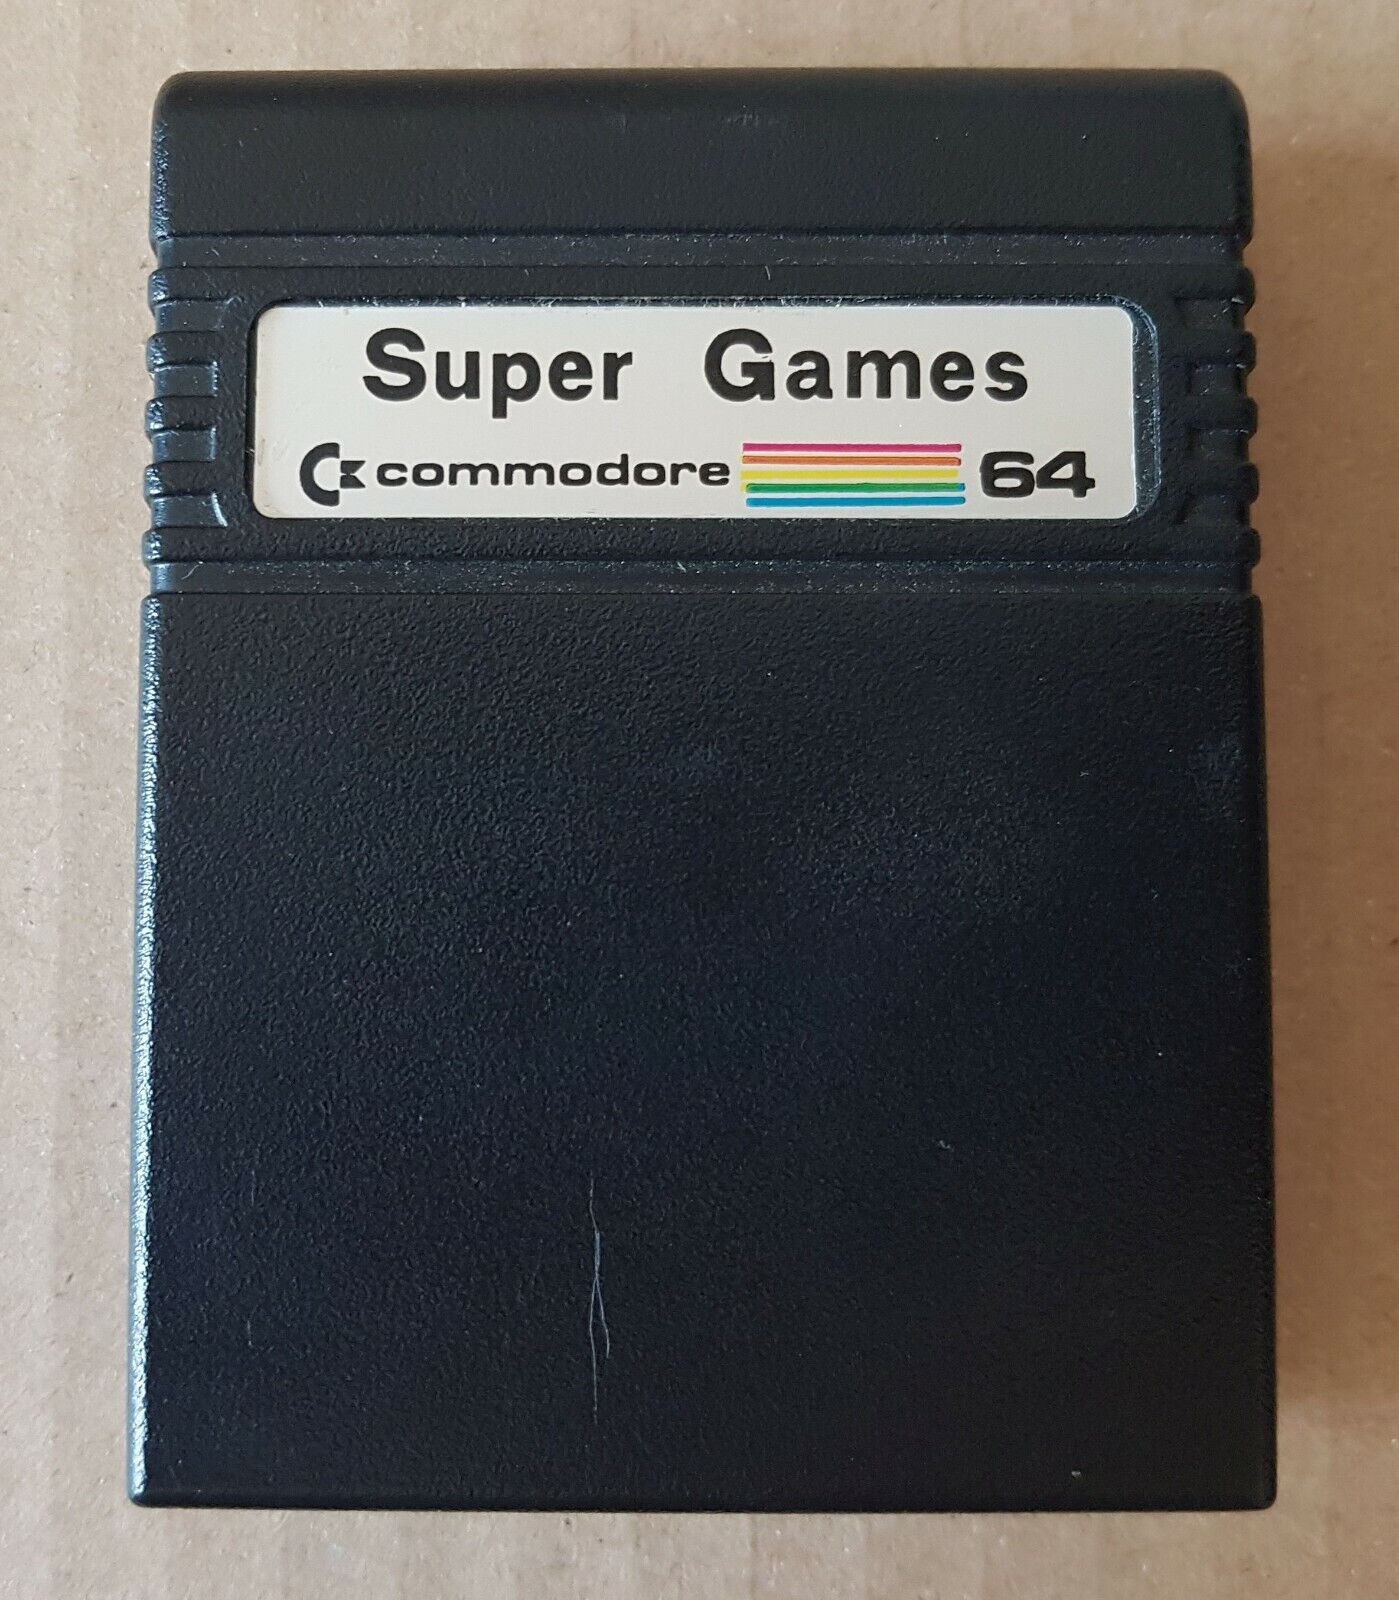 Super Games Original cartridge for Commodore 64/128 Genuine part